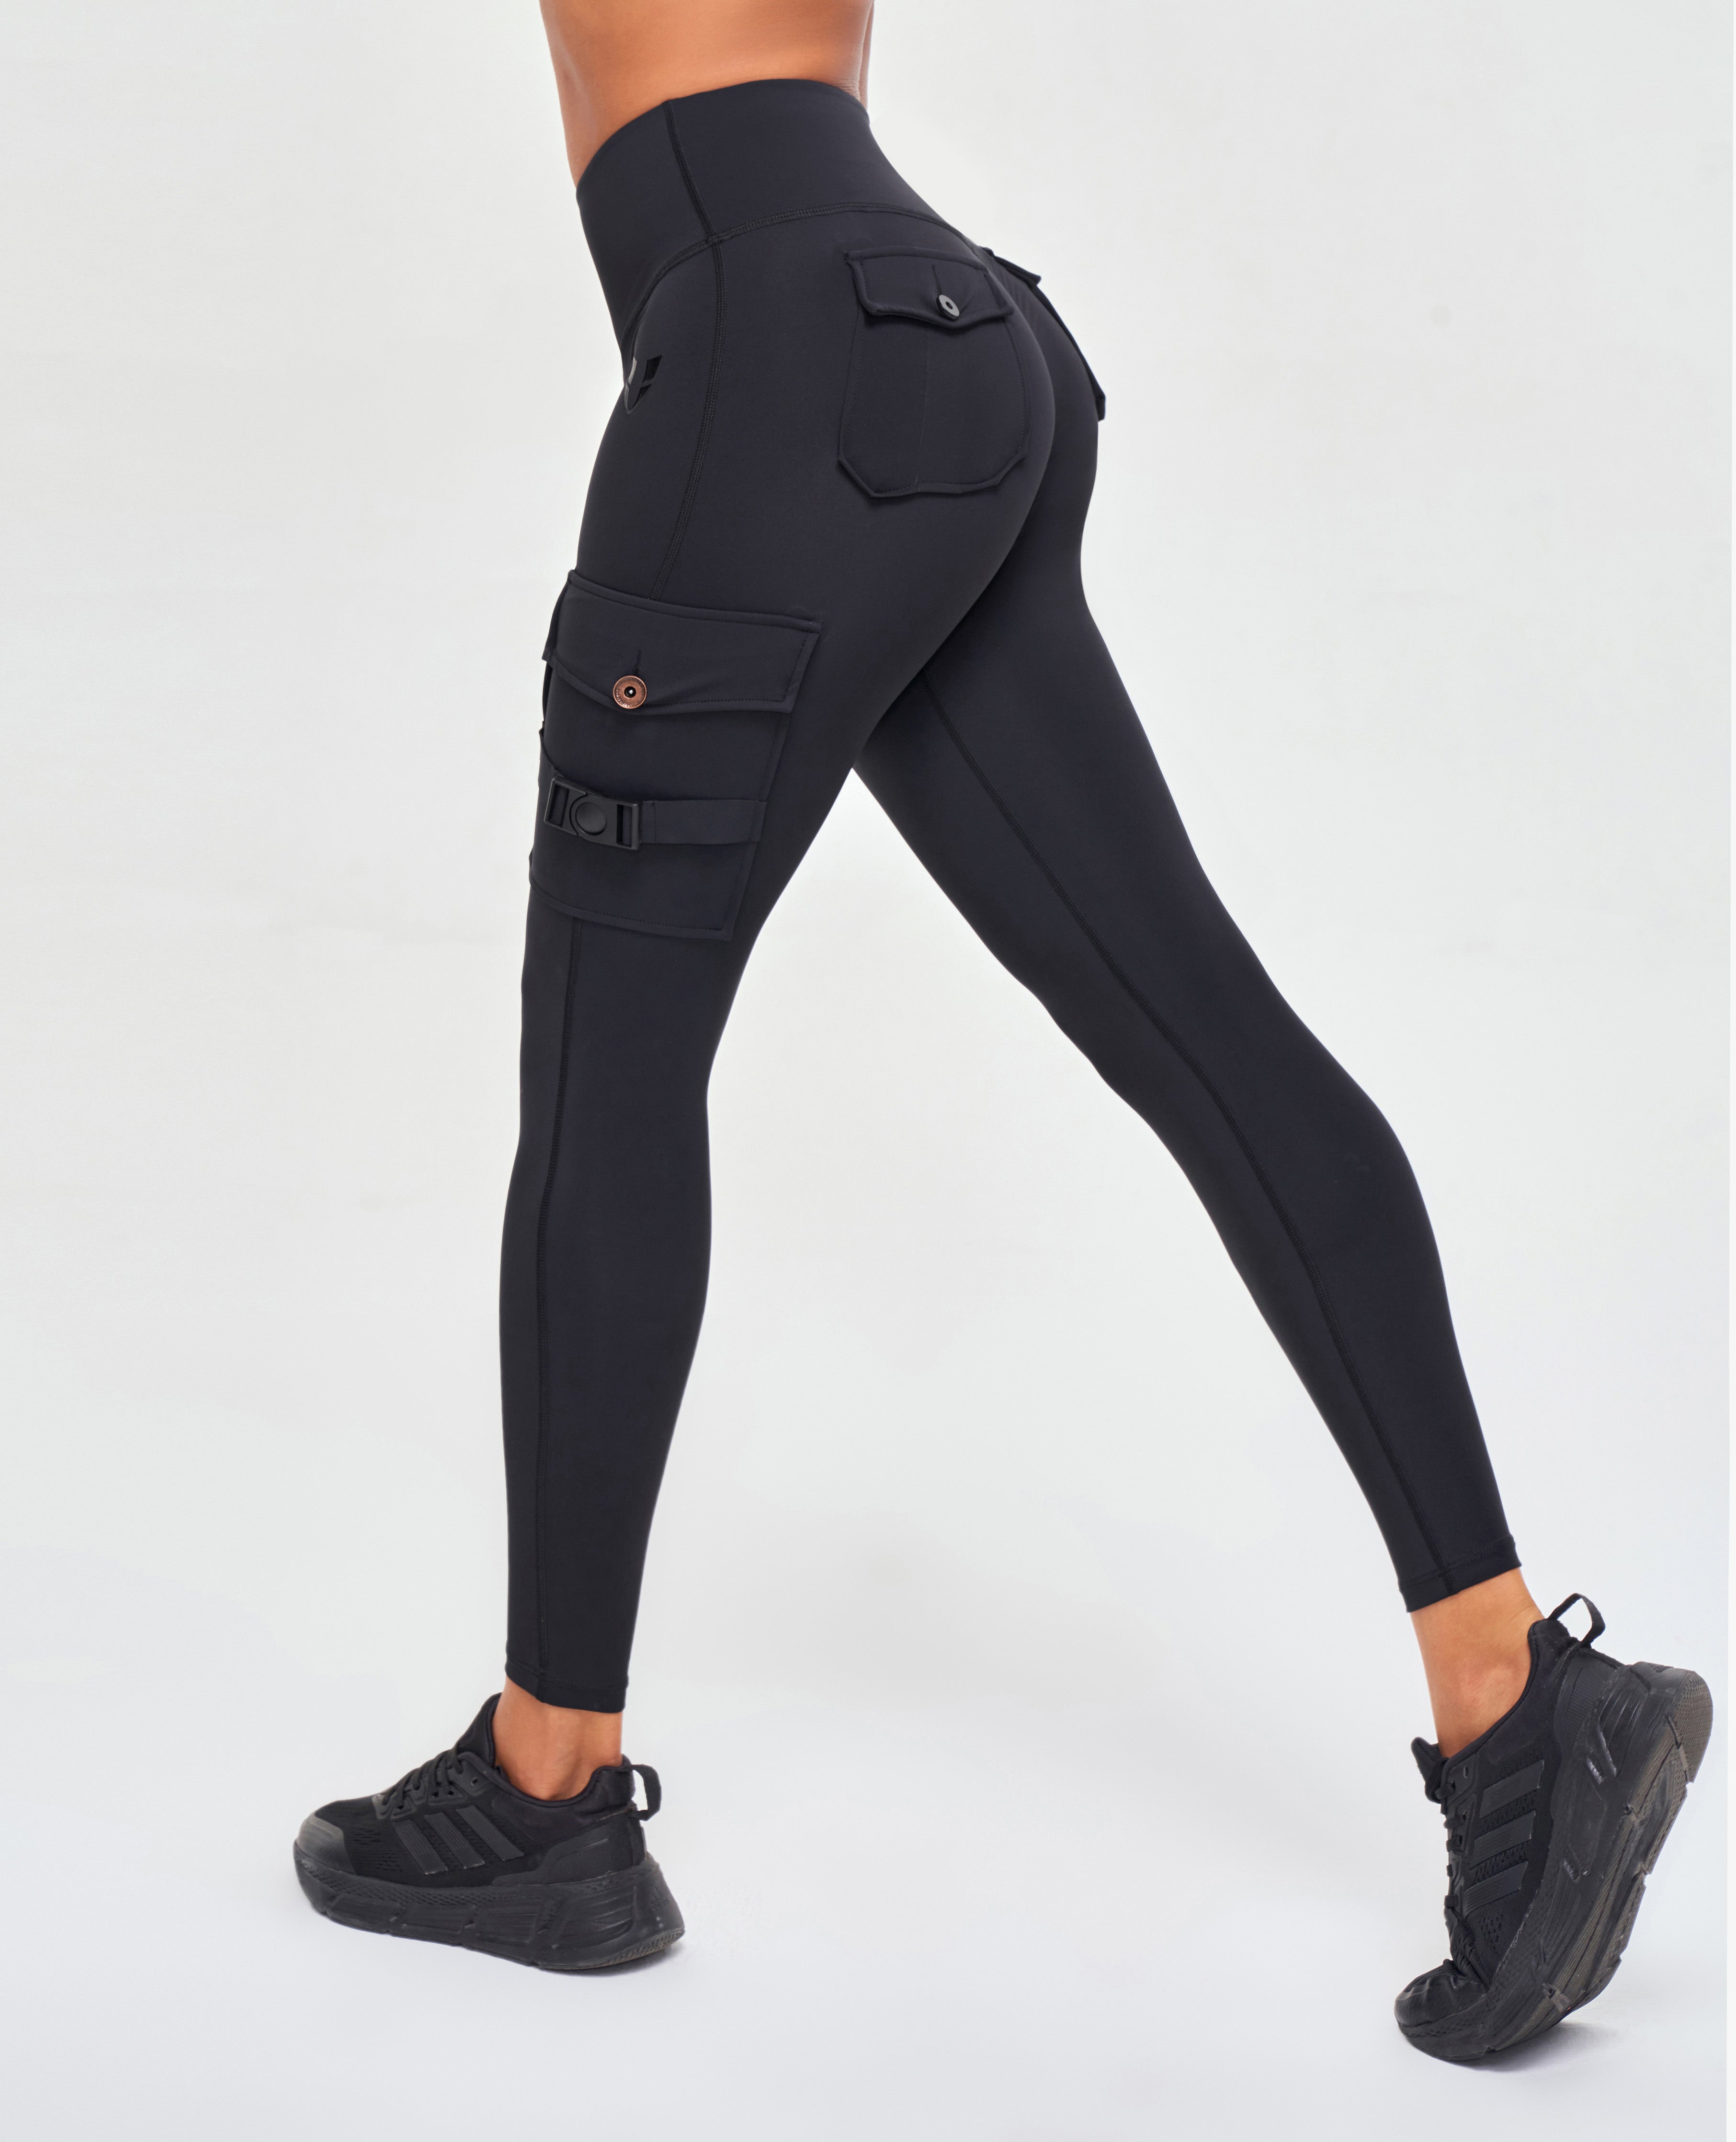 2023 Women Black High Waisted Skinny Pants Korean Fashion Seamless Leggings  Sportswear Gym Running Training Tights Fall Hot Sale